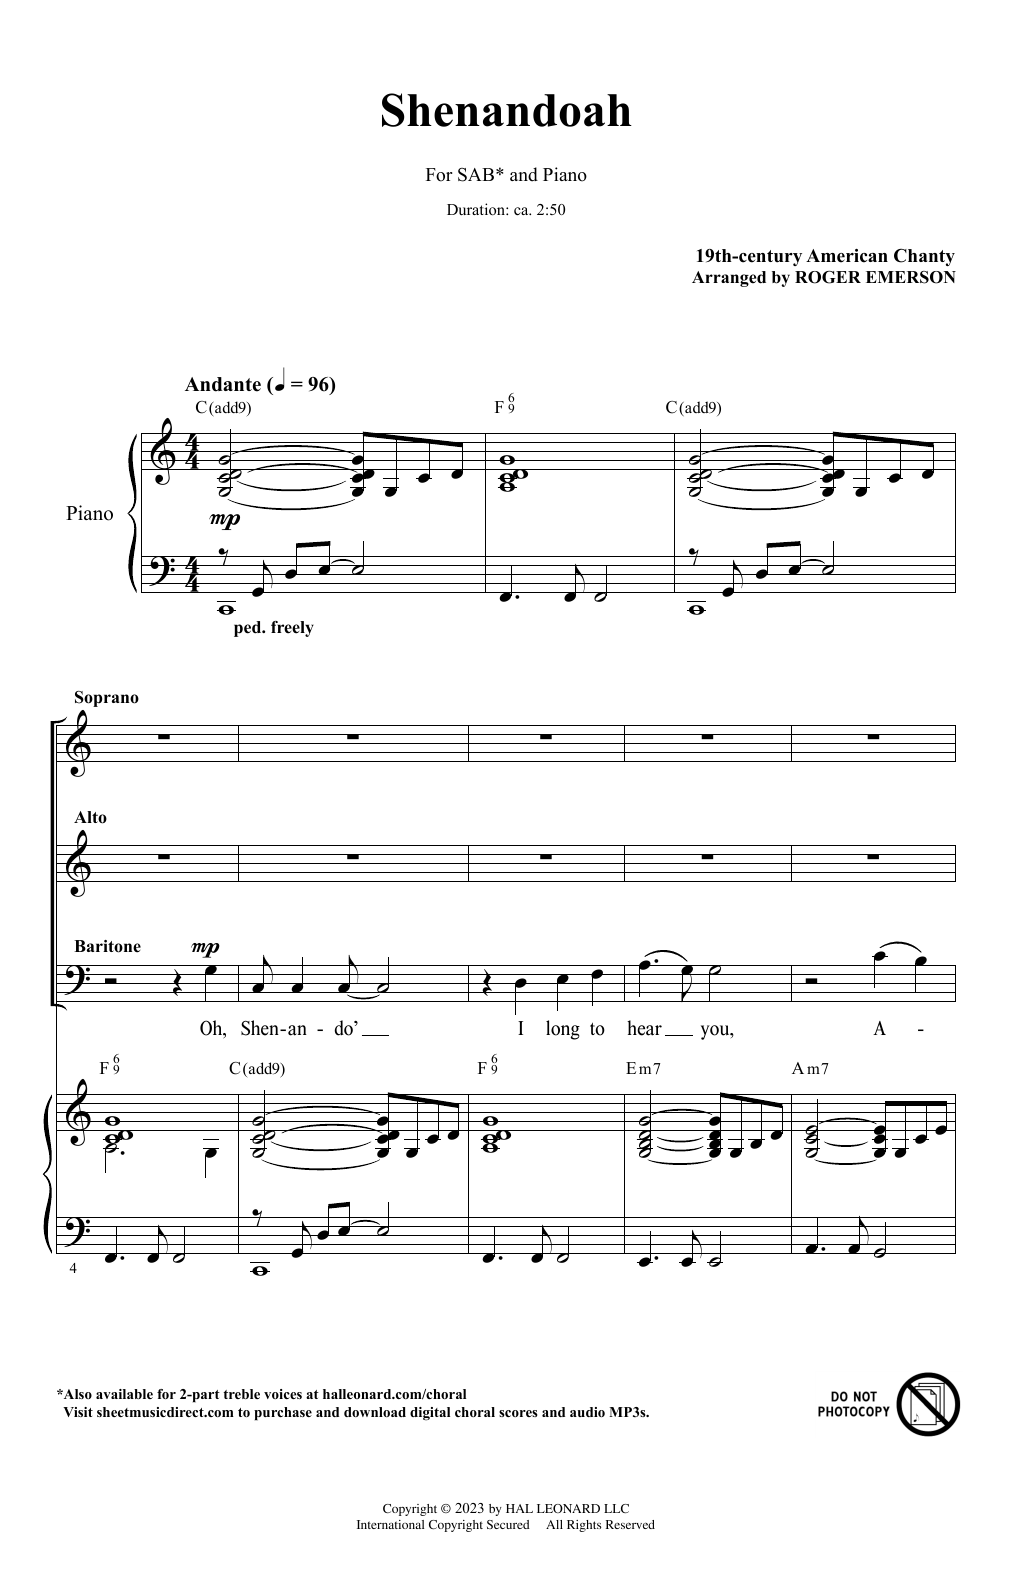 19th Century American Chanty Shenandoah (arr. Roger Emerson) Sheet Music Notes & Chords for SAB Choir - Download or Print PDF